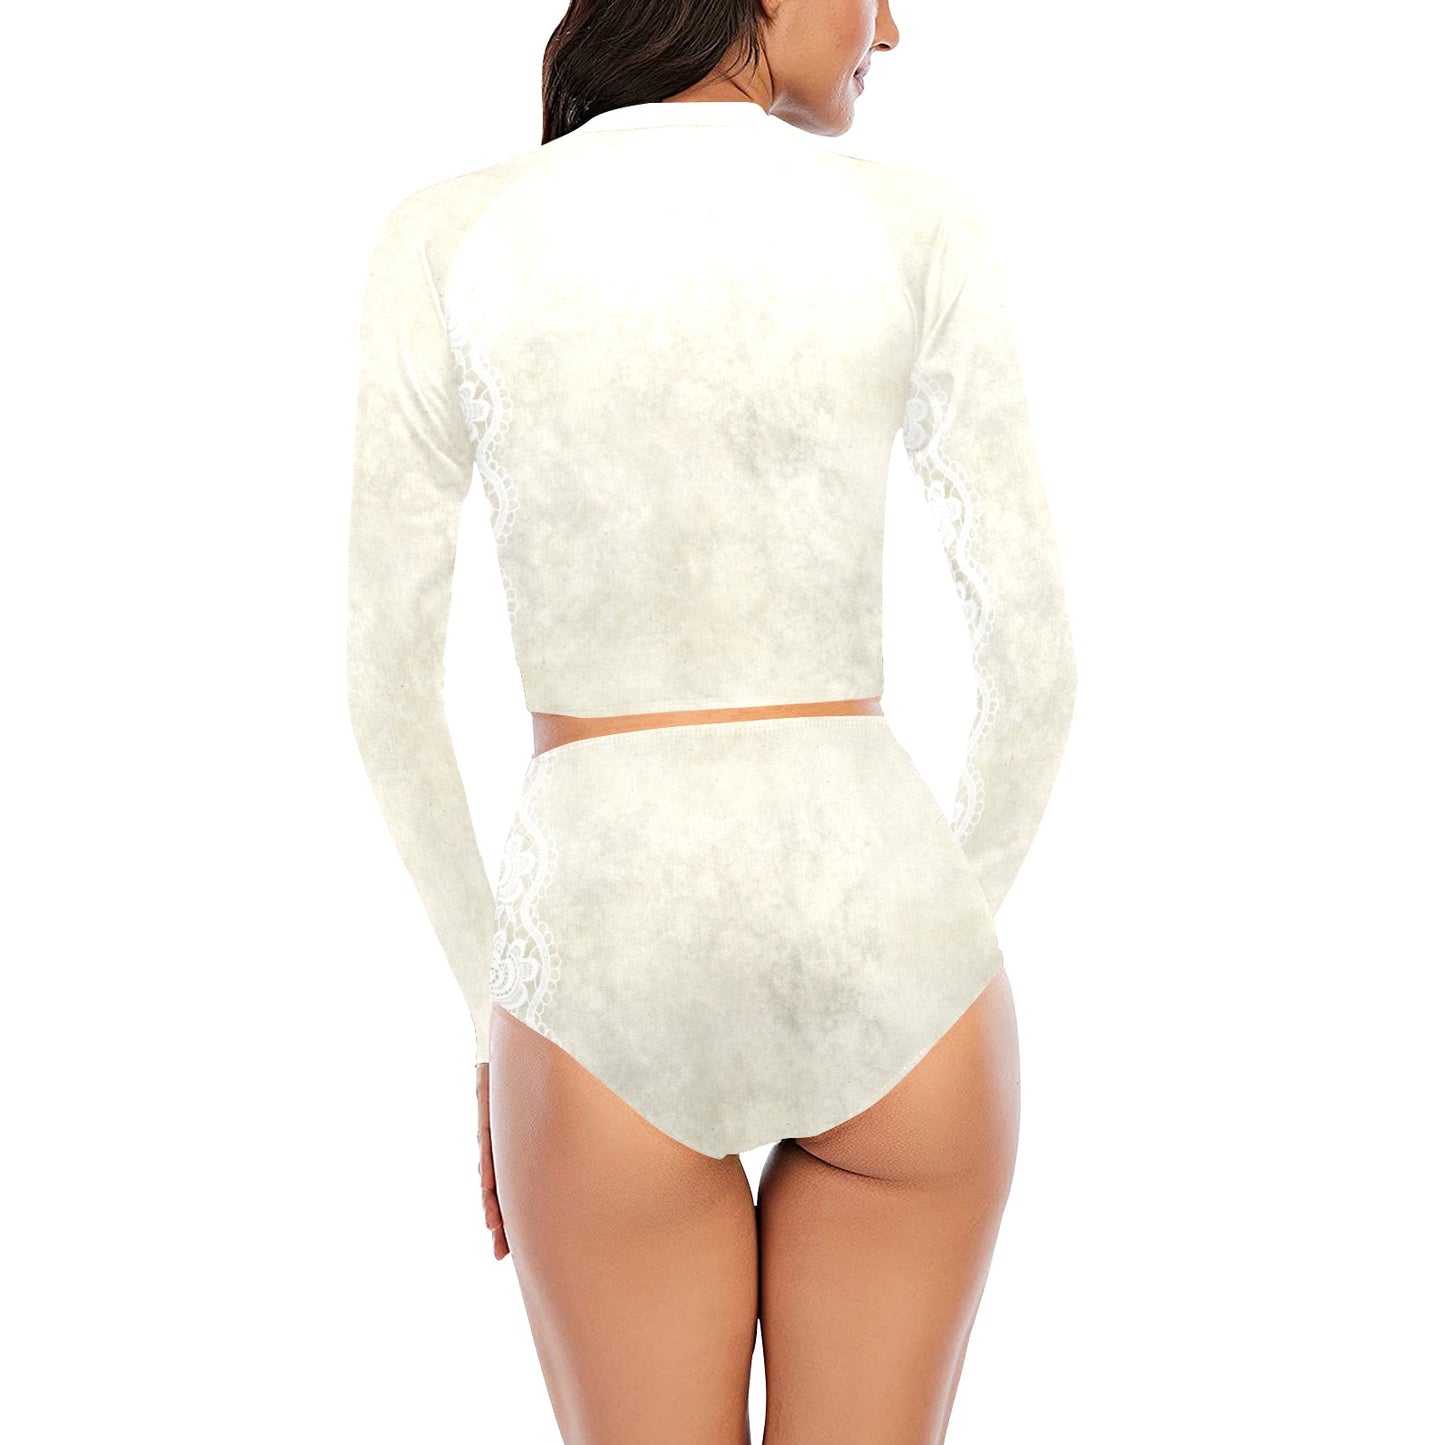 Victorian printed lace, long sleeve 2pc swimsuit, beachwear, design 27 Long Sleeve Bikini Set (Model S27)